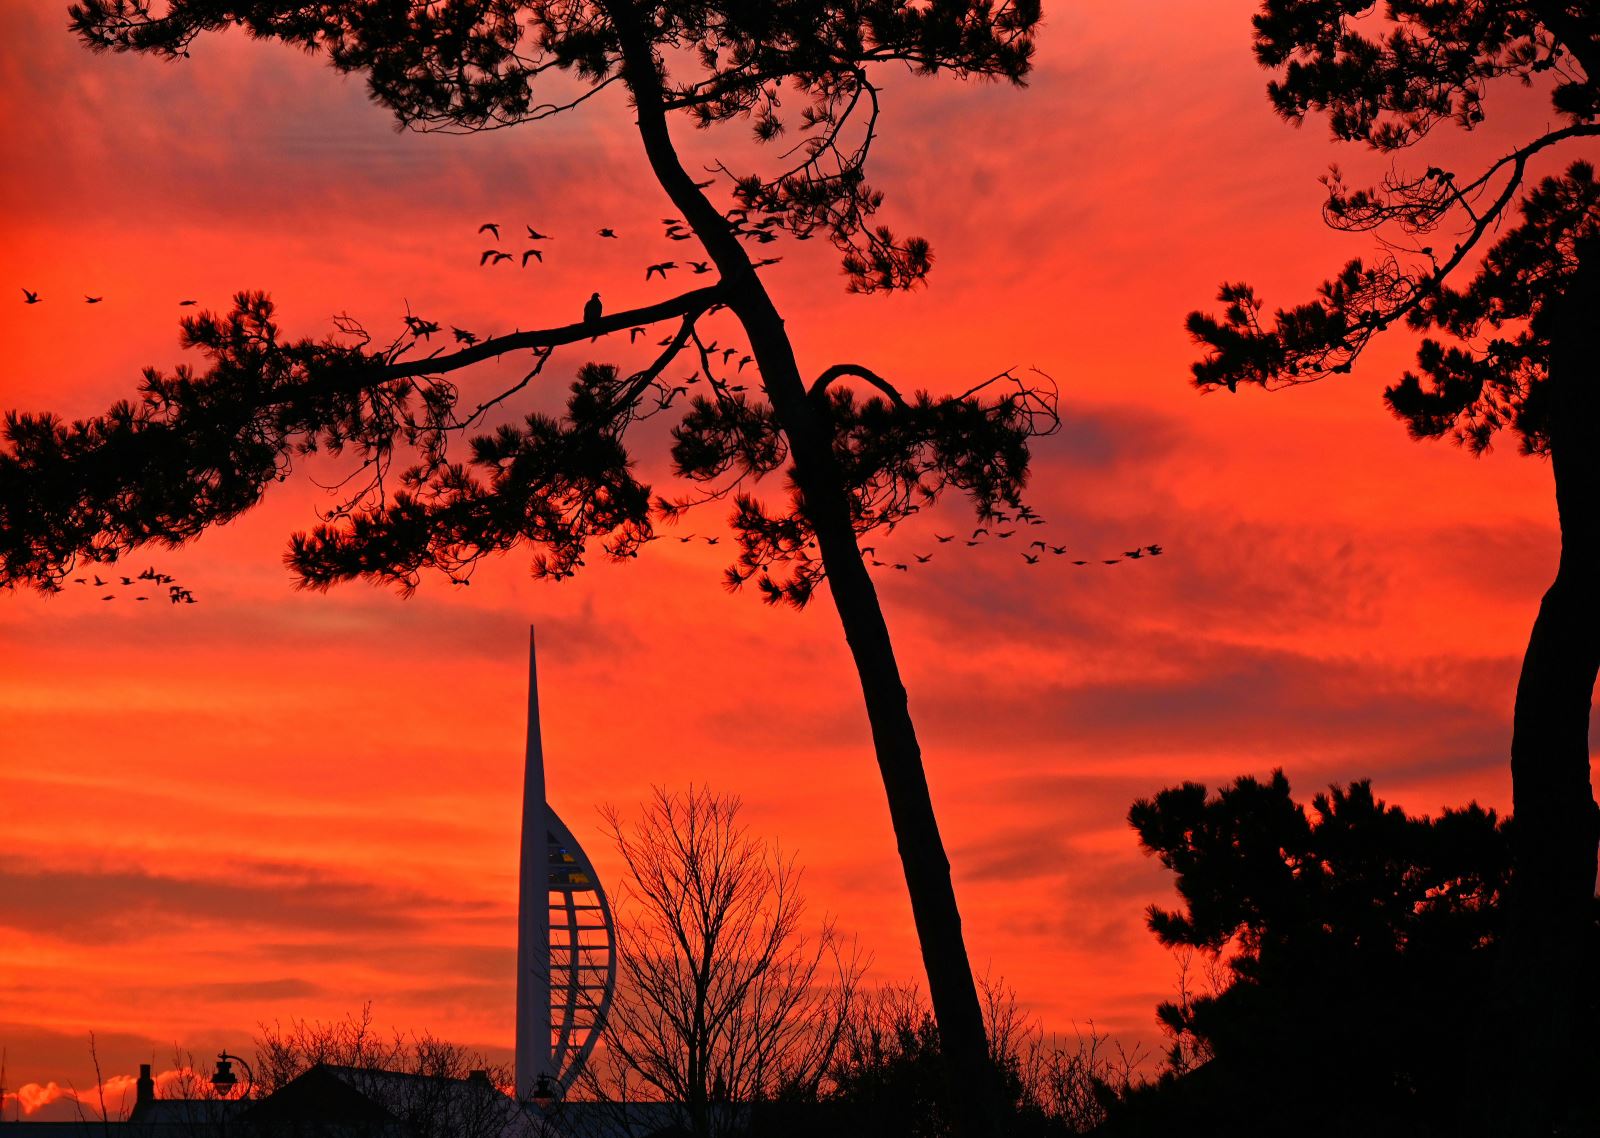 Portsmouth, Hampshire